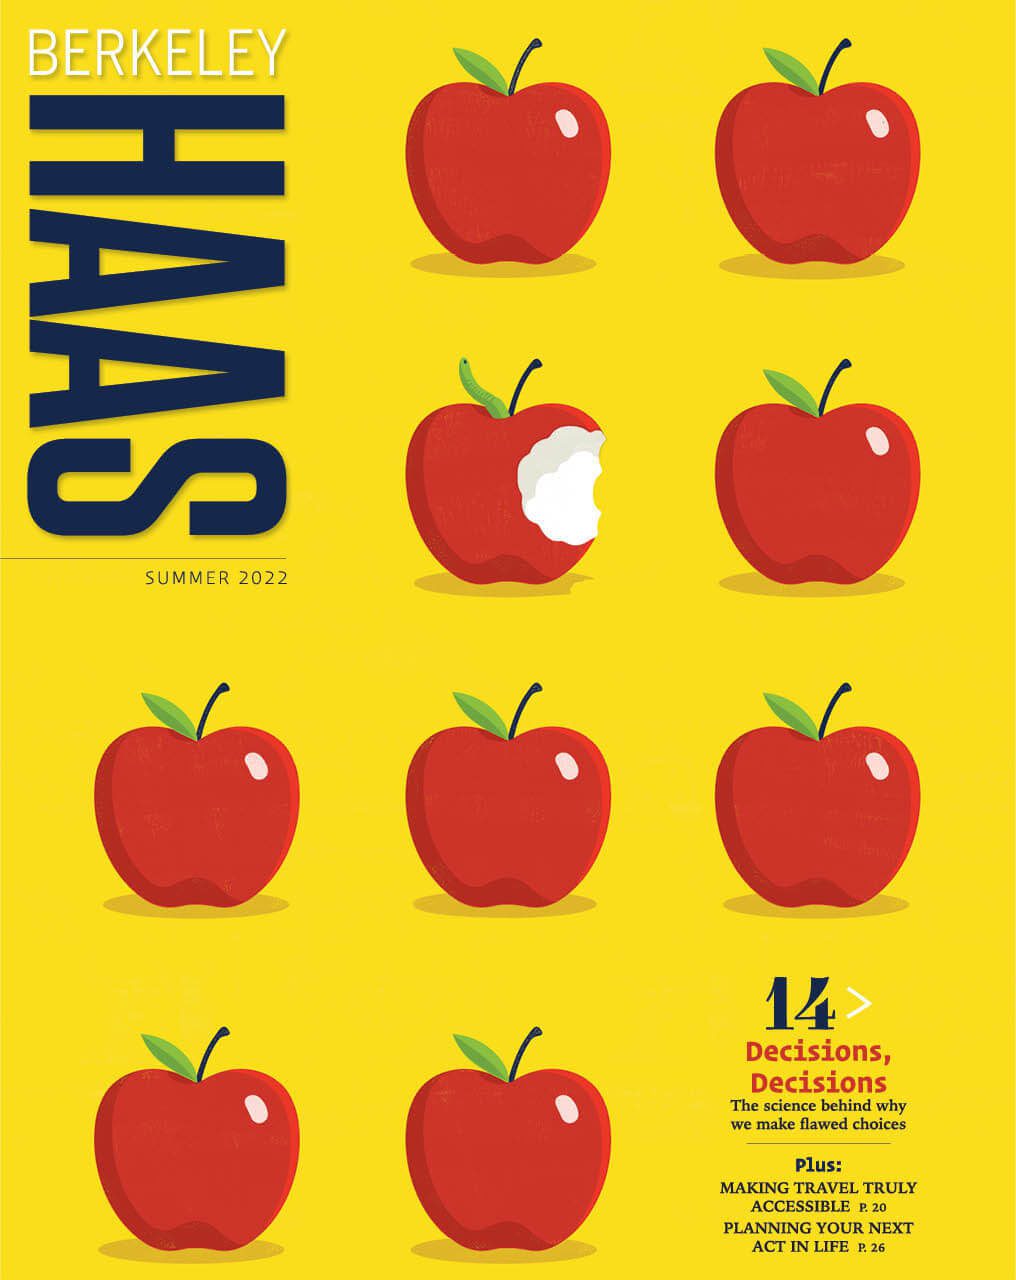 Cover of summer 2022 Berkeley Haas magazine.